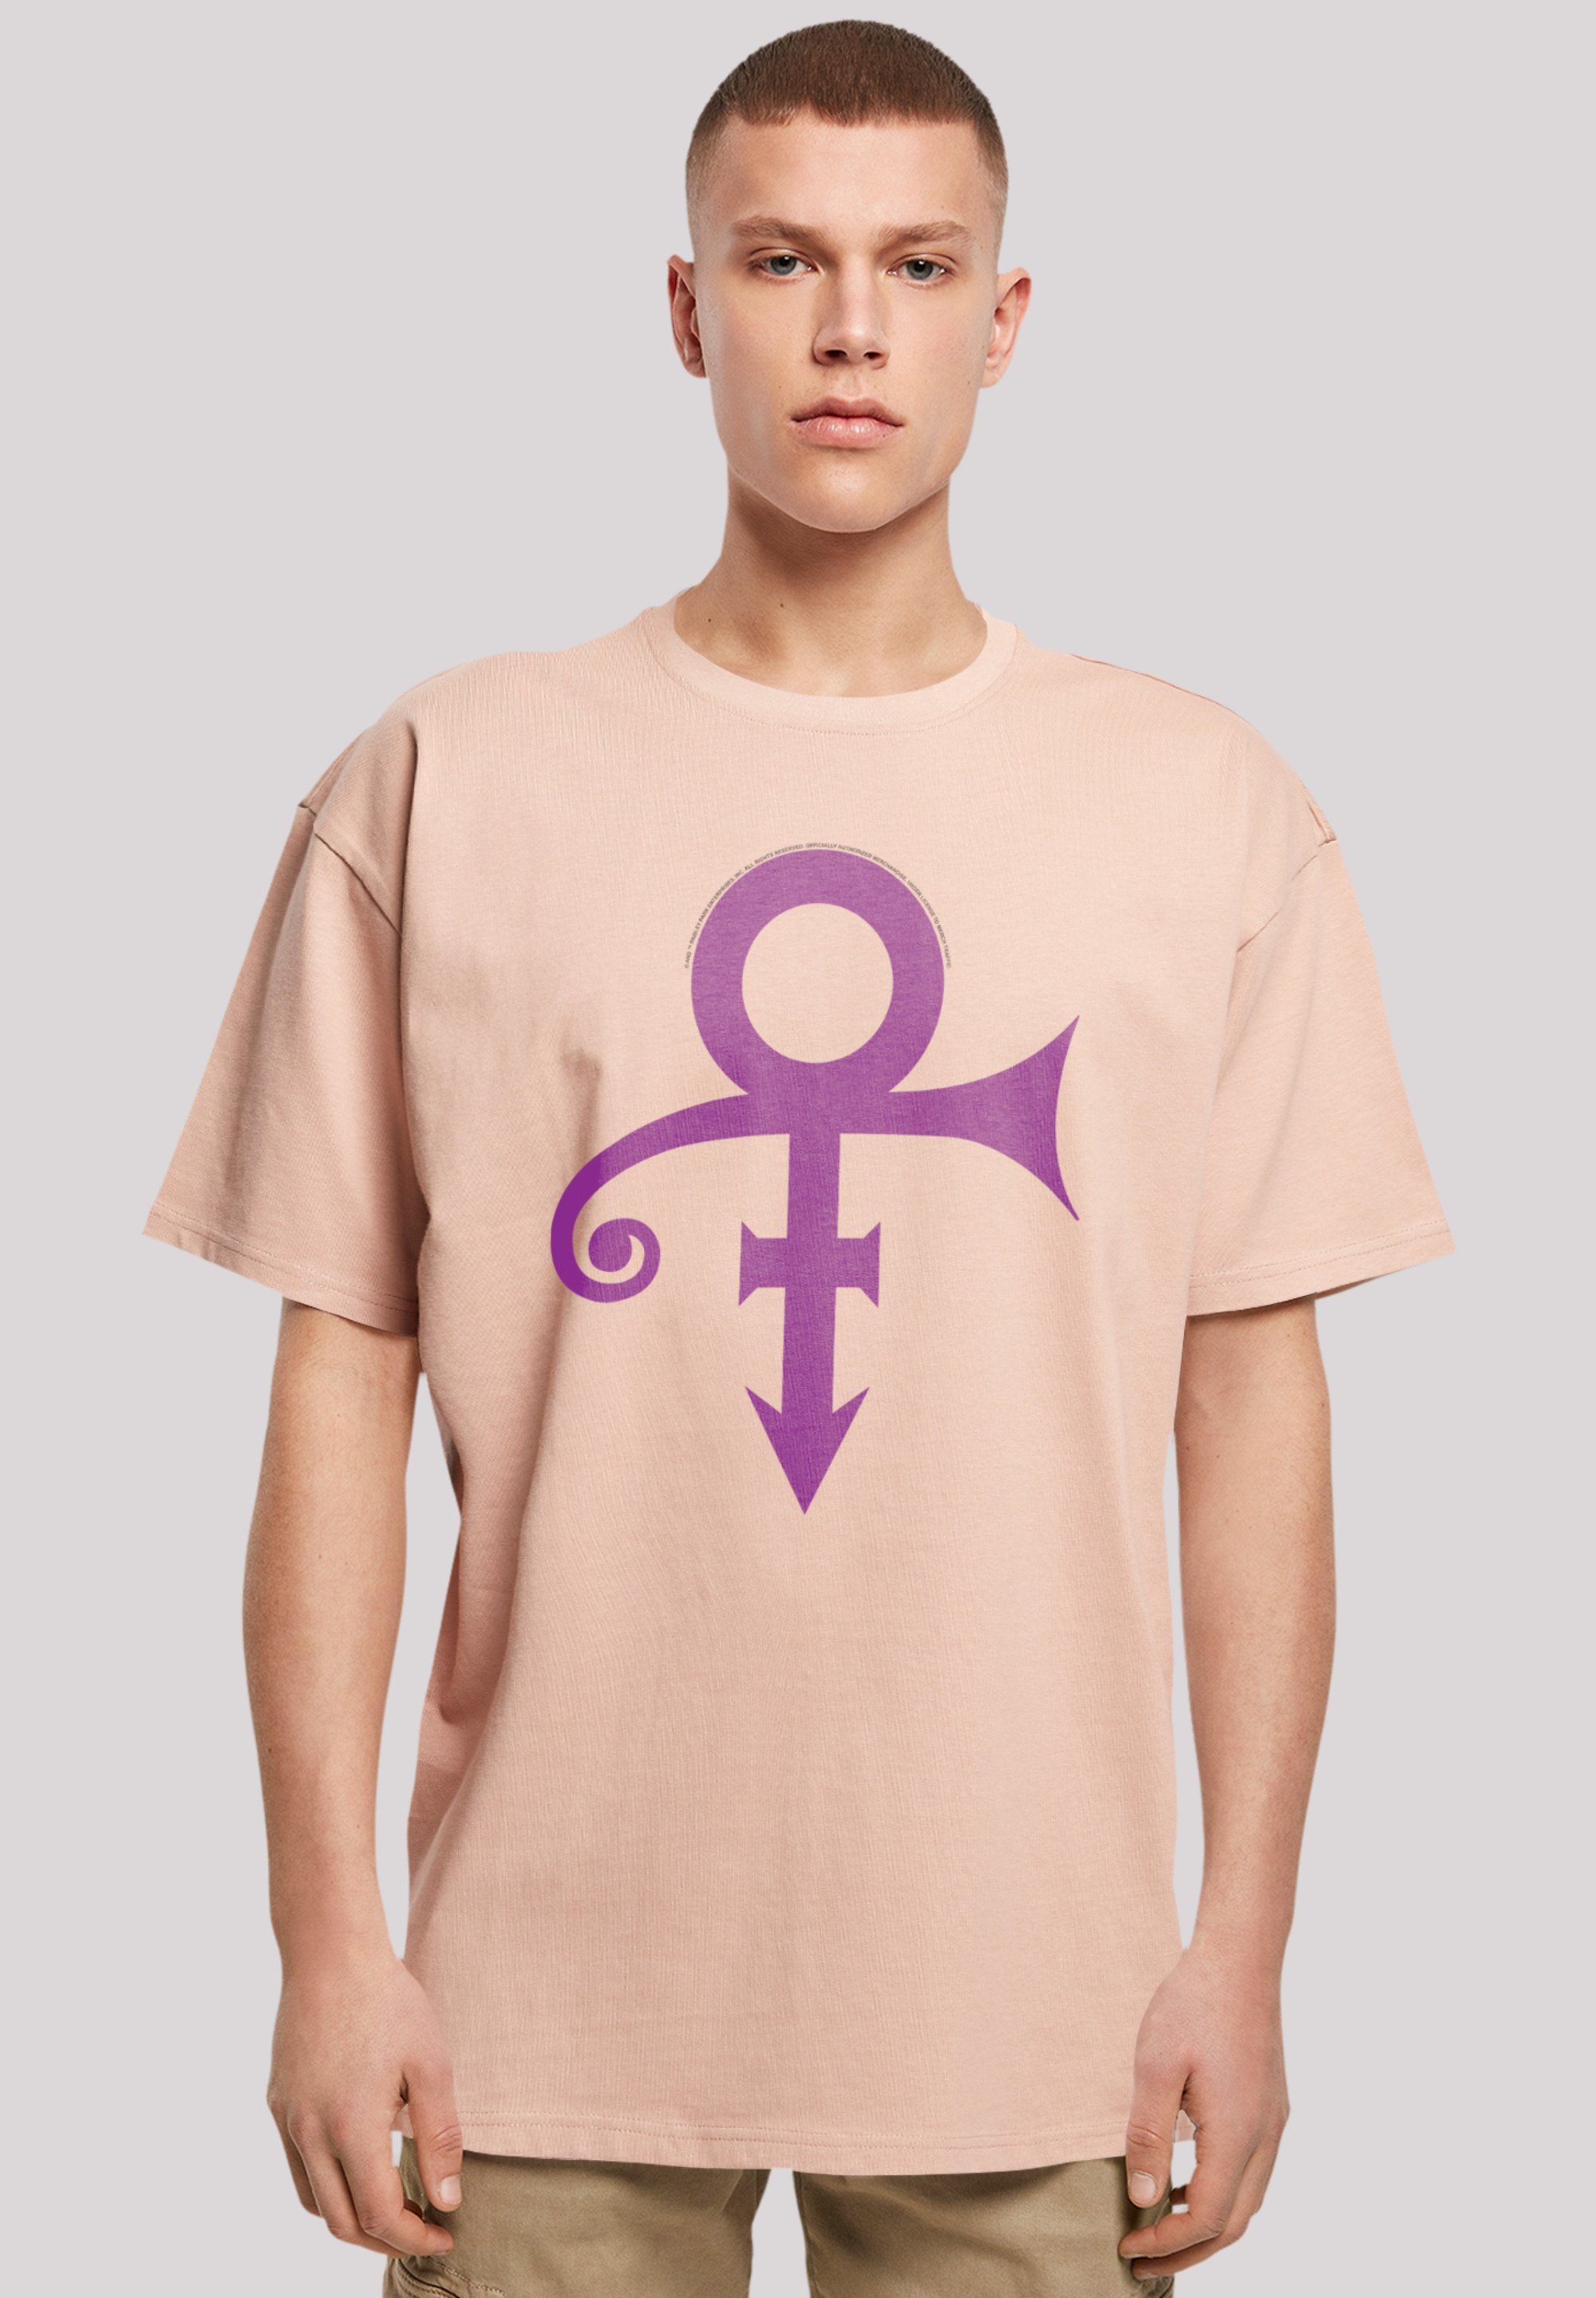 F4NT4STIC T-Shirt Prince Band Qualität, amber Album Premium Musik Rock-Musik, Logo